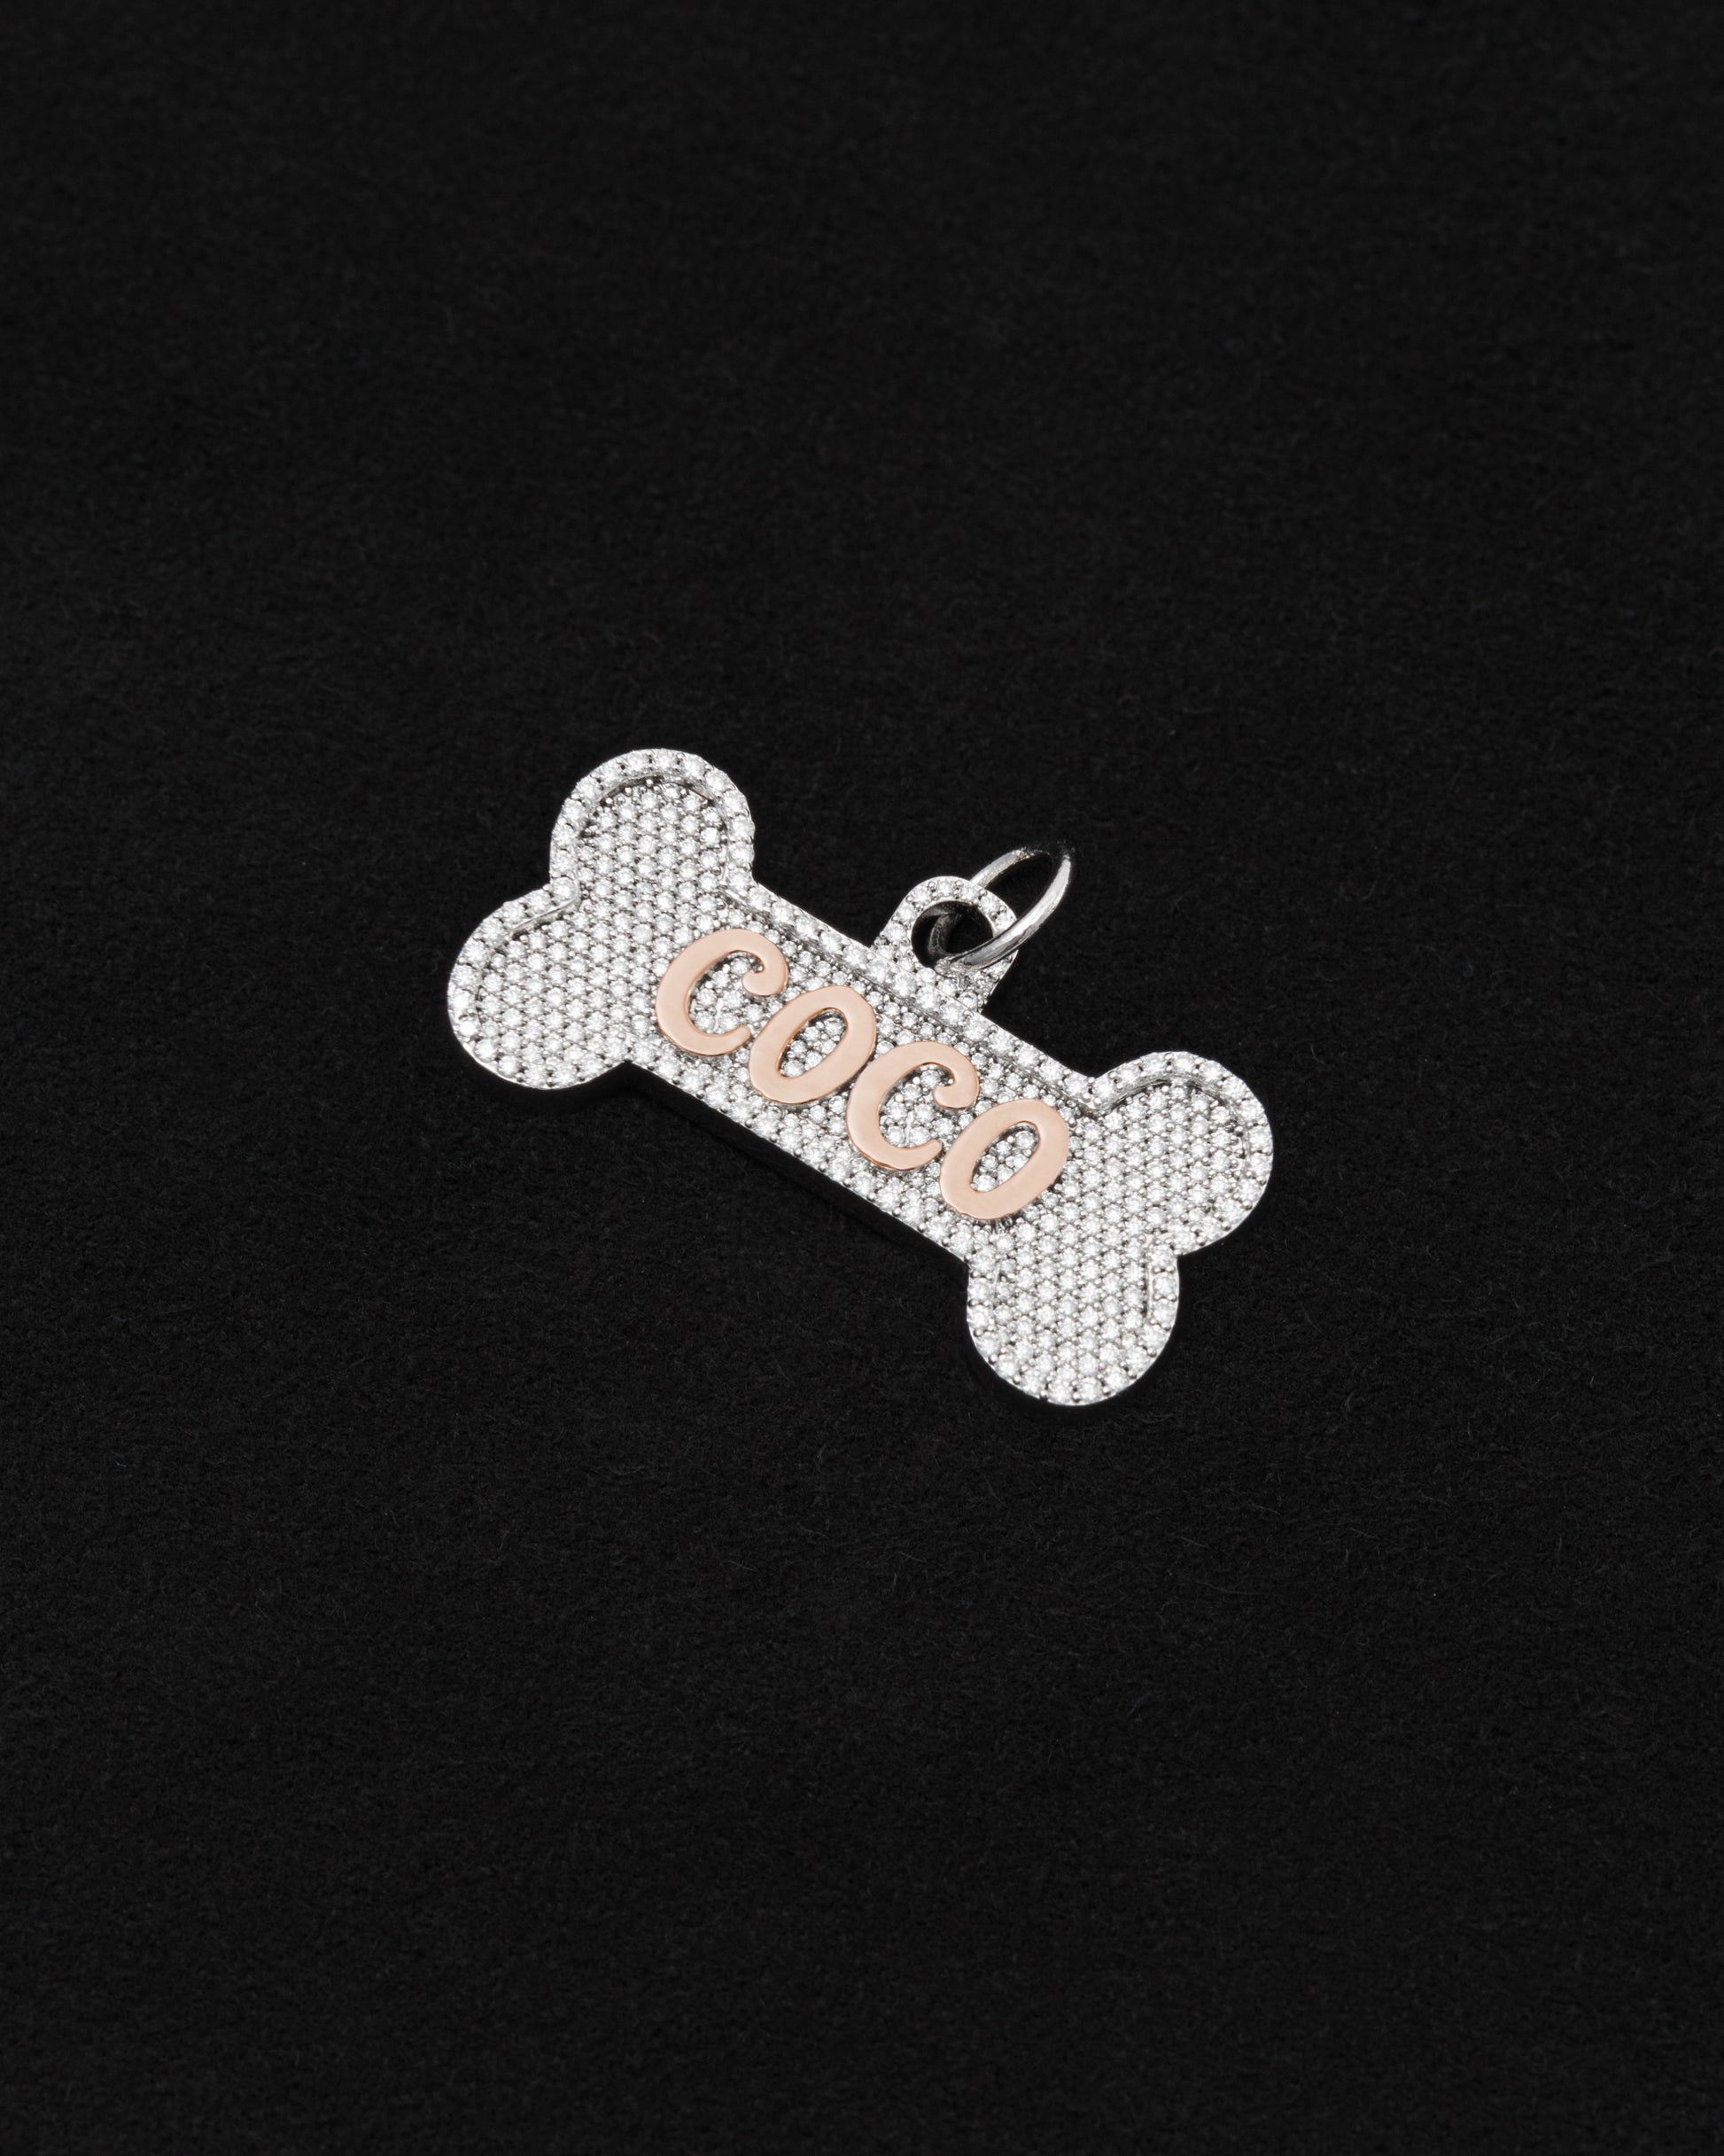 DARKAI puppy custom tag with moissanite diamonds